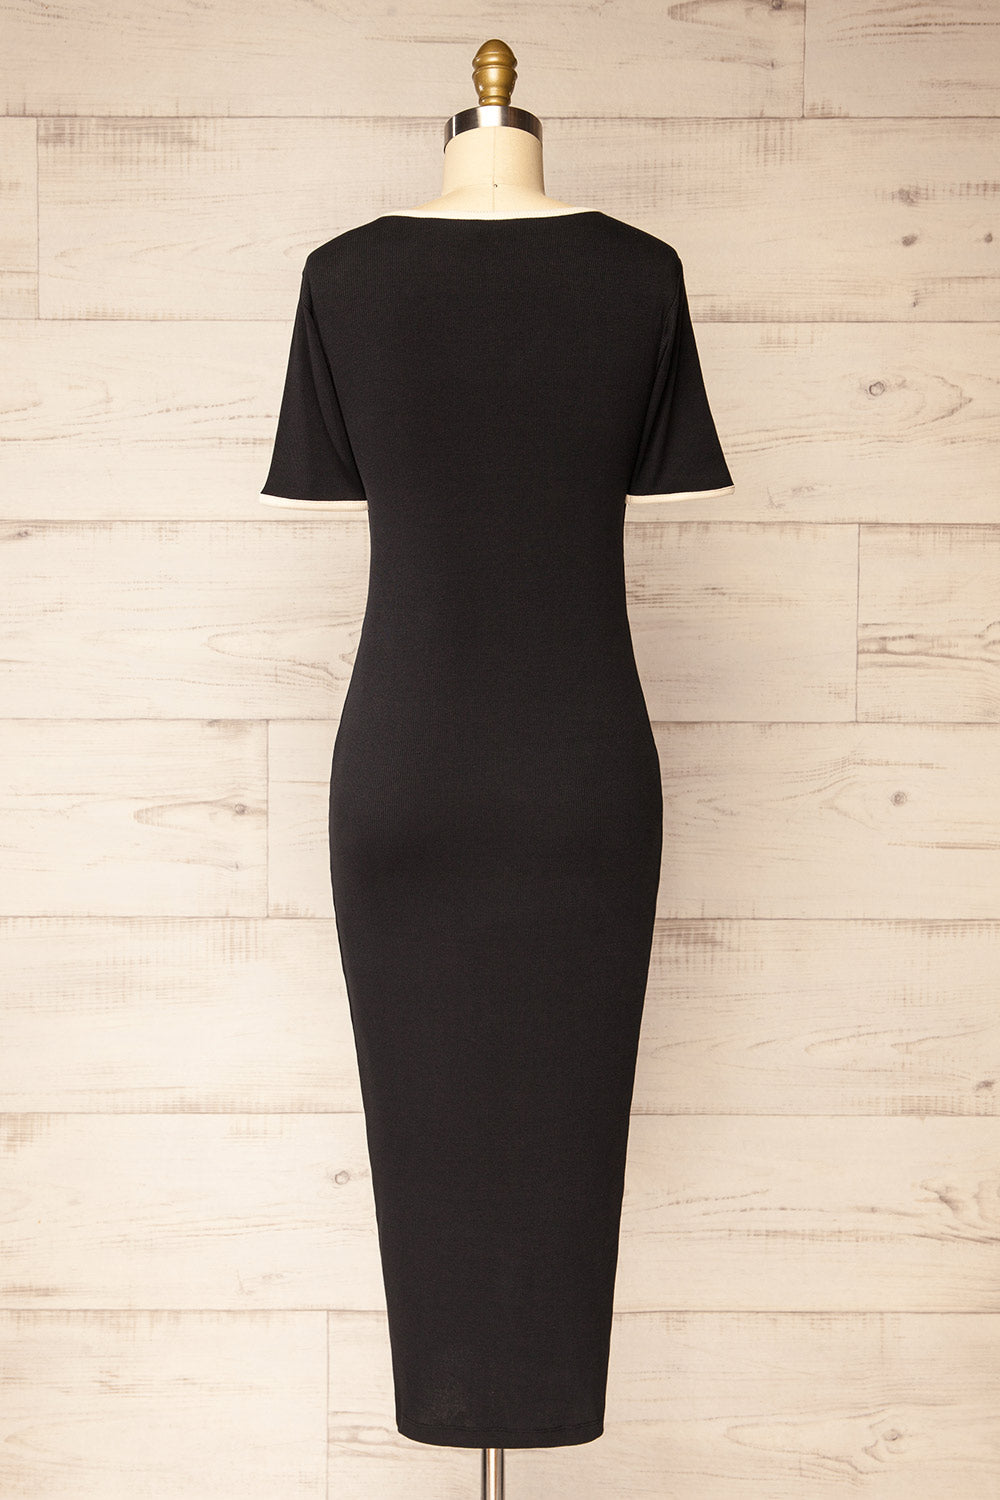 Phloriane Black Ribbed Midi Dress w/ Ivory Trim | La petite garçonne back view